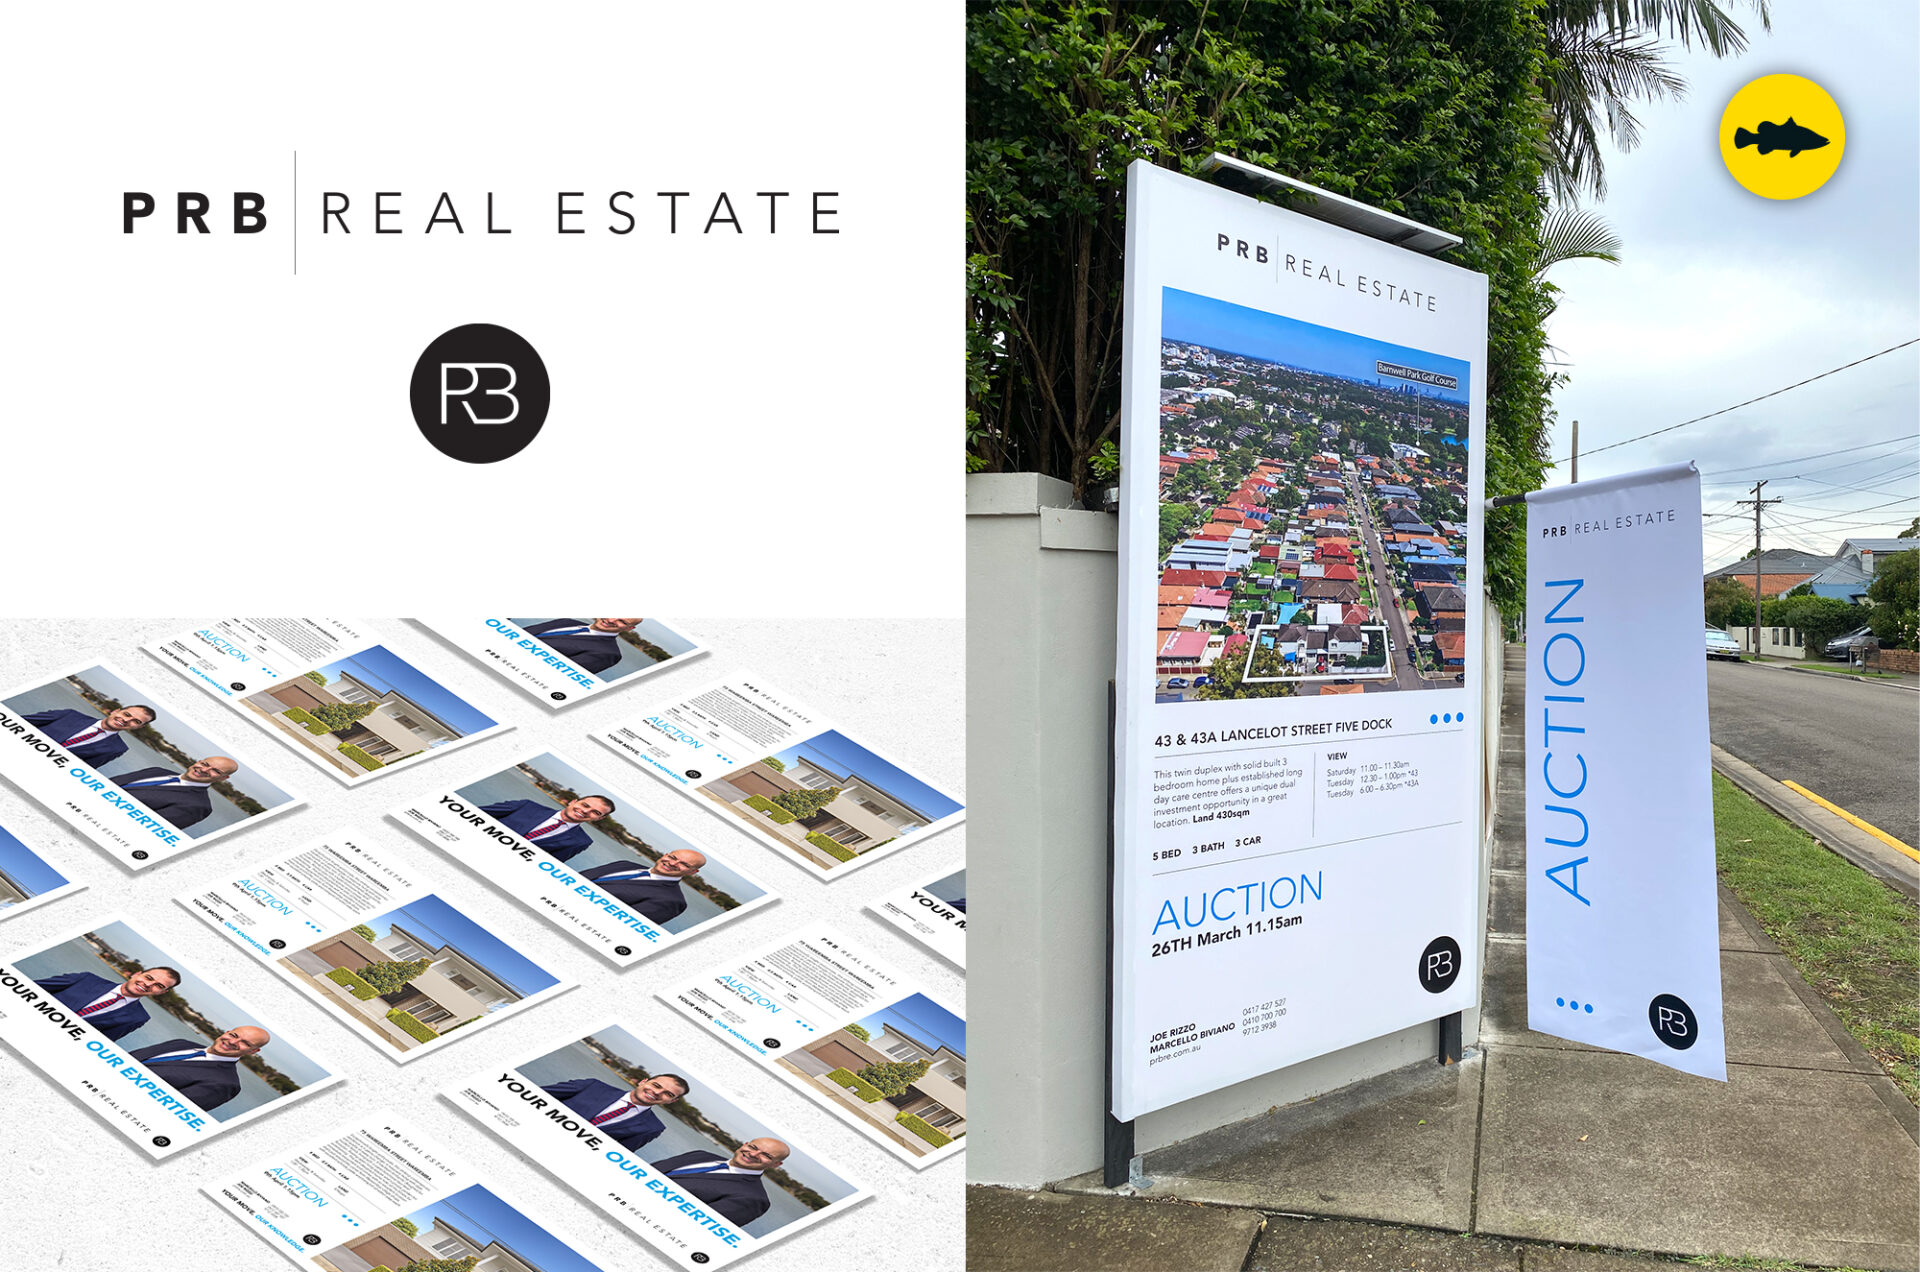 PRB Real Estate’s brand evolution